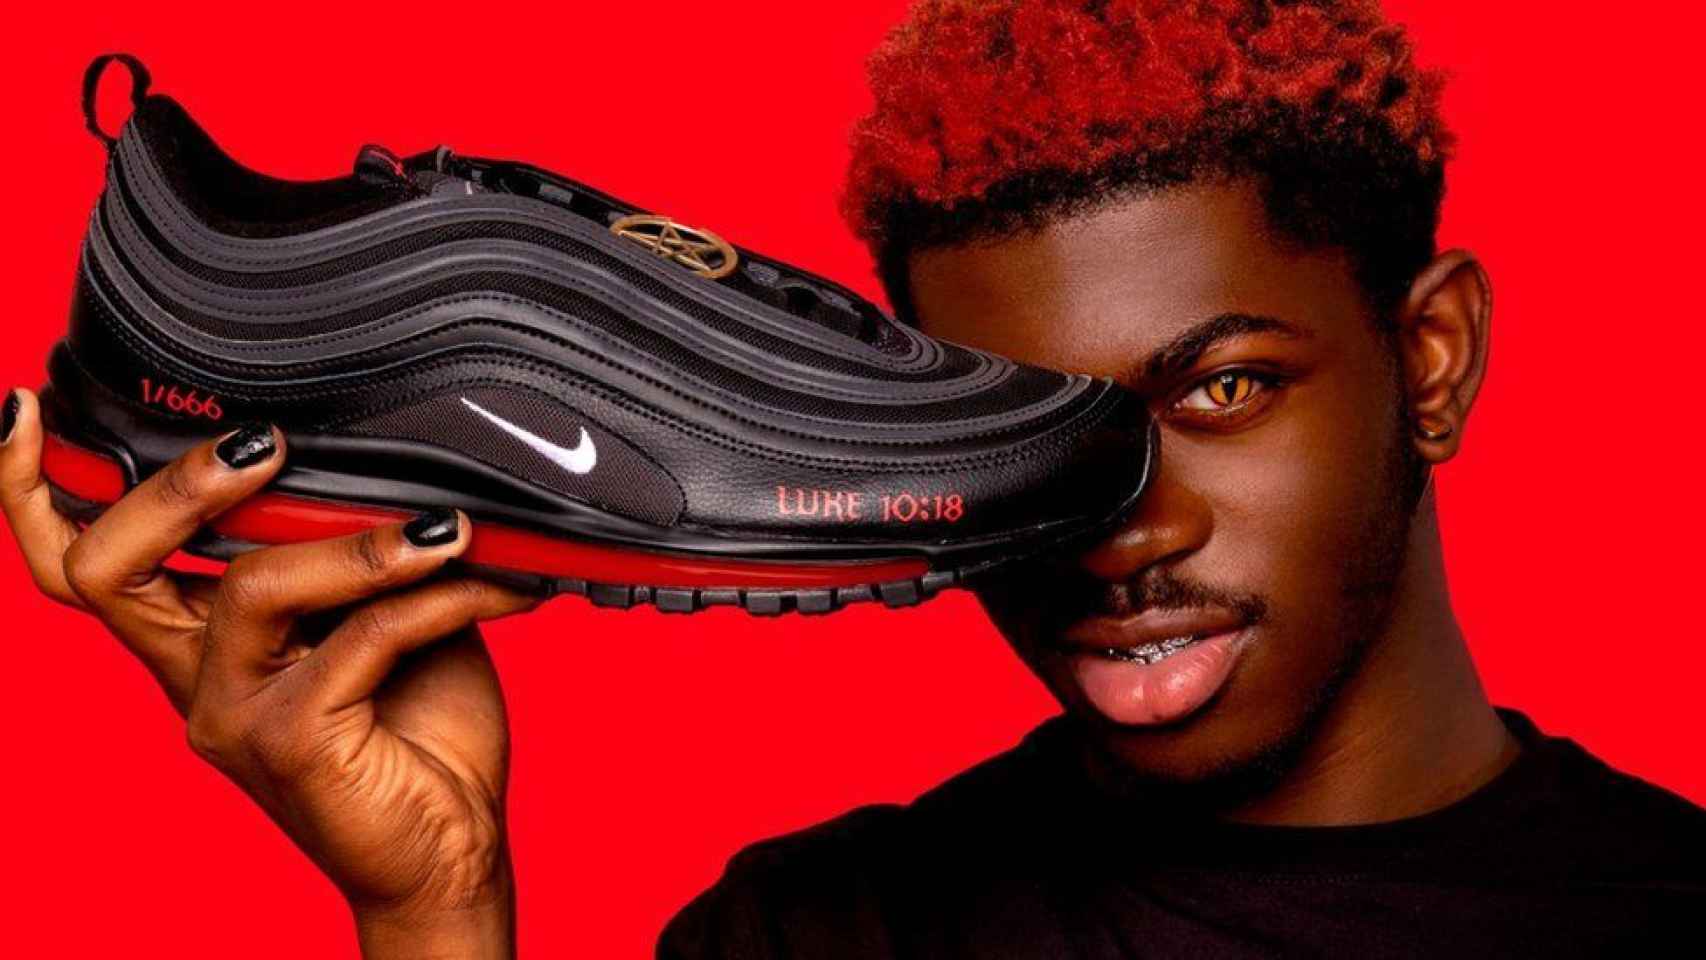 Nike satánicas con sangre humana, a 1.018 $: creadas por el rapero Lil X sin ningún